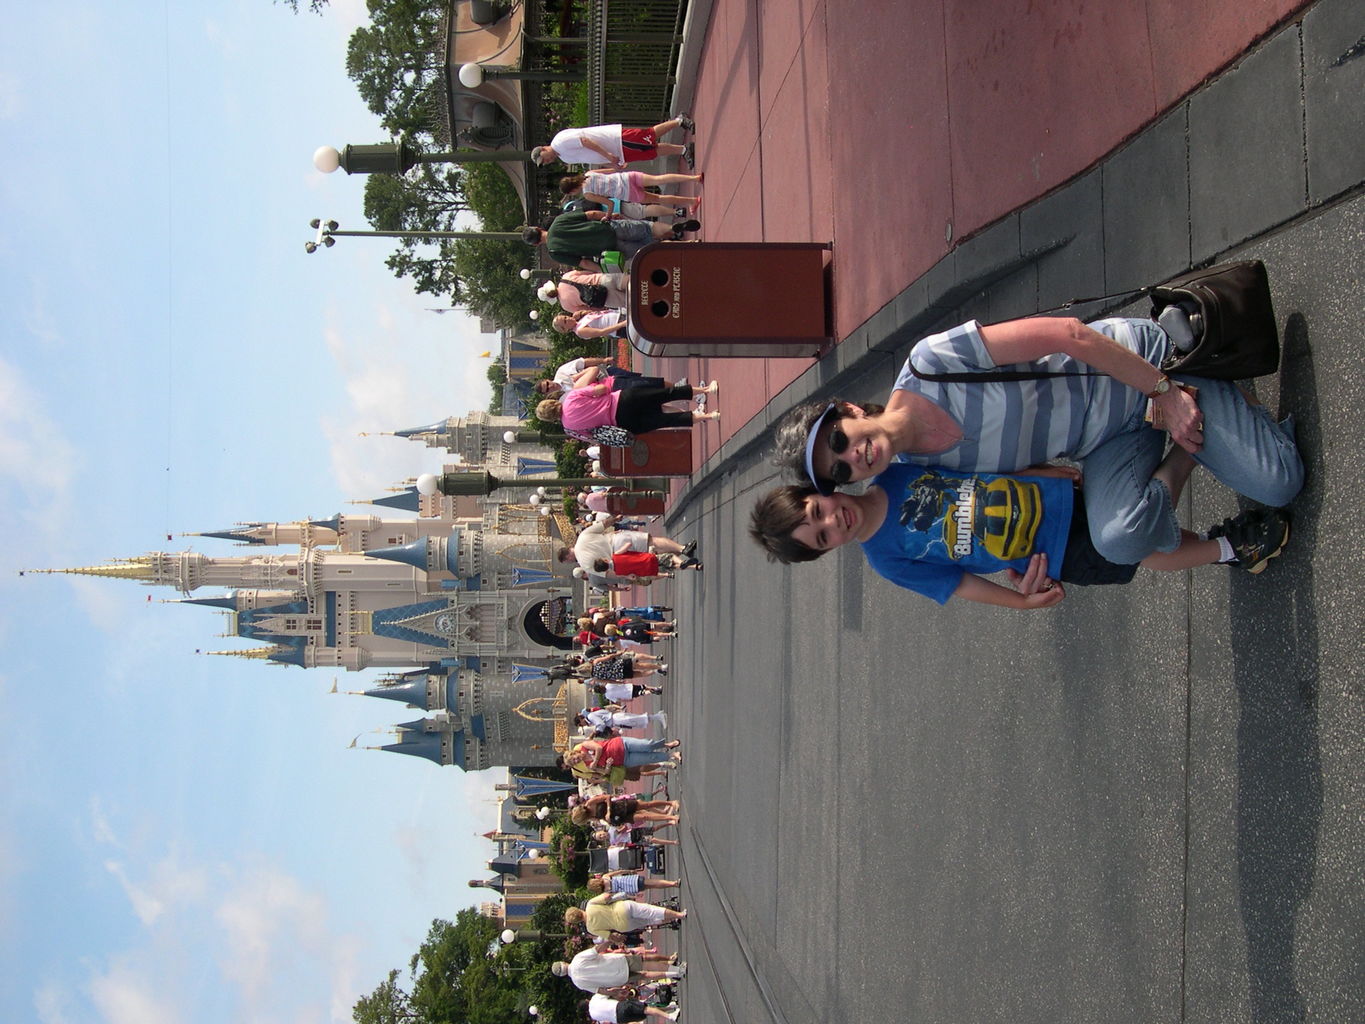 James goes to DisneyWorld